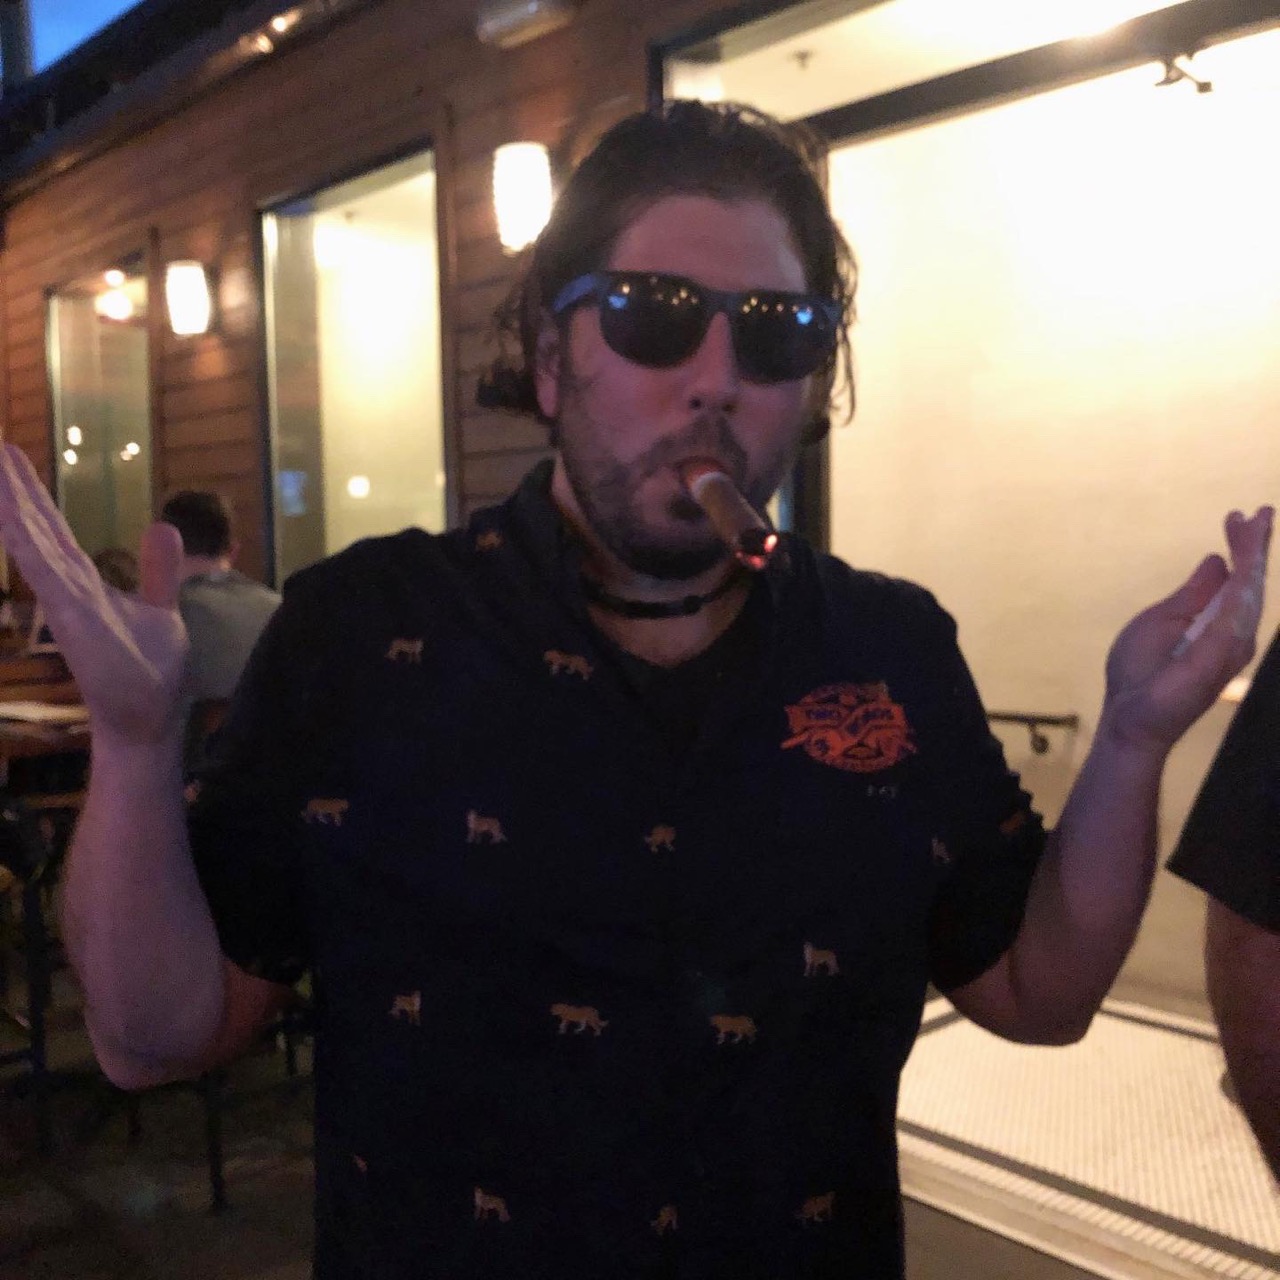 Lee shrugs at cigars (DC).